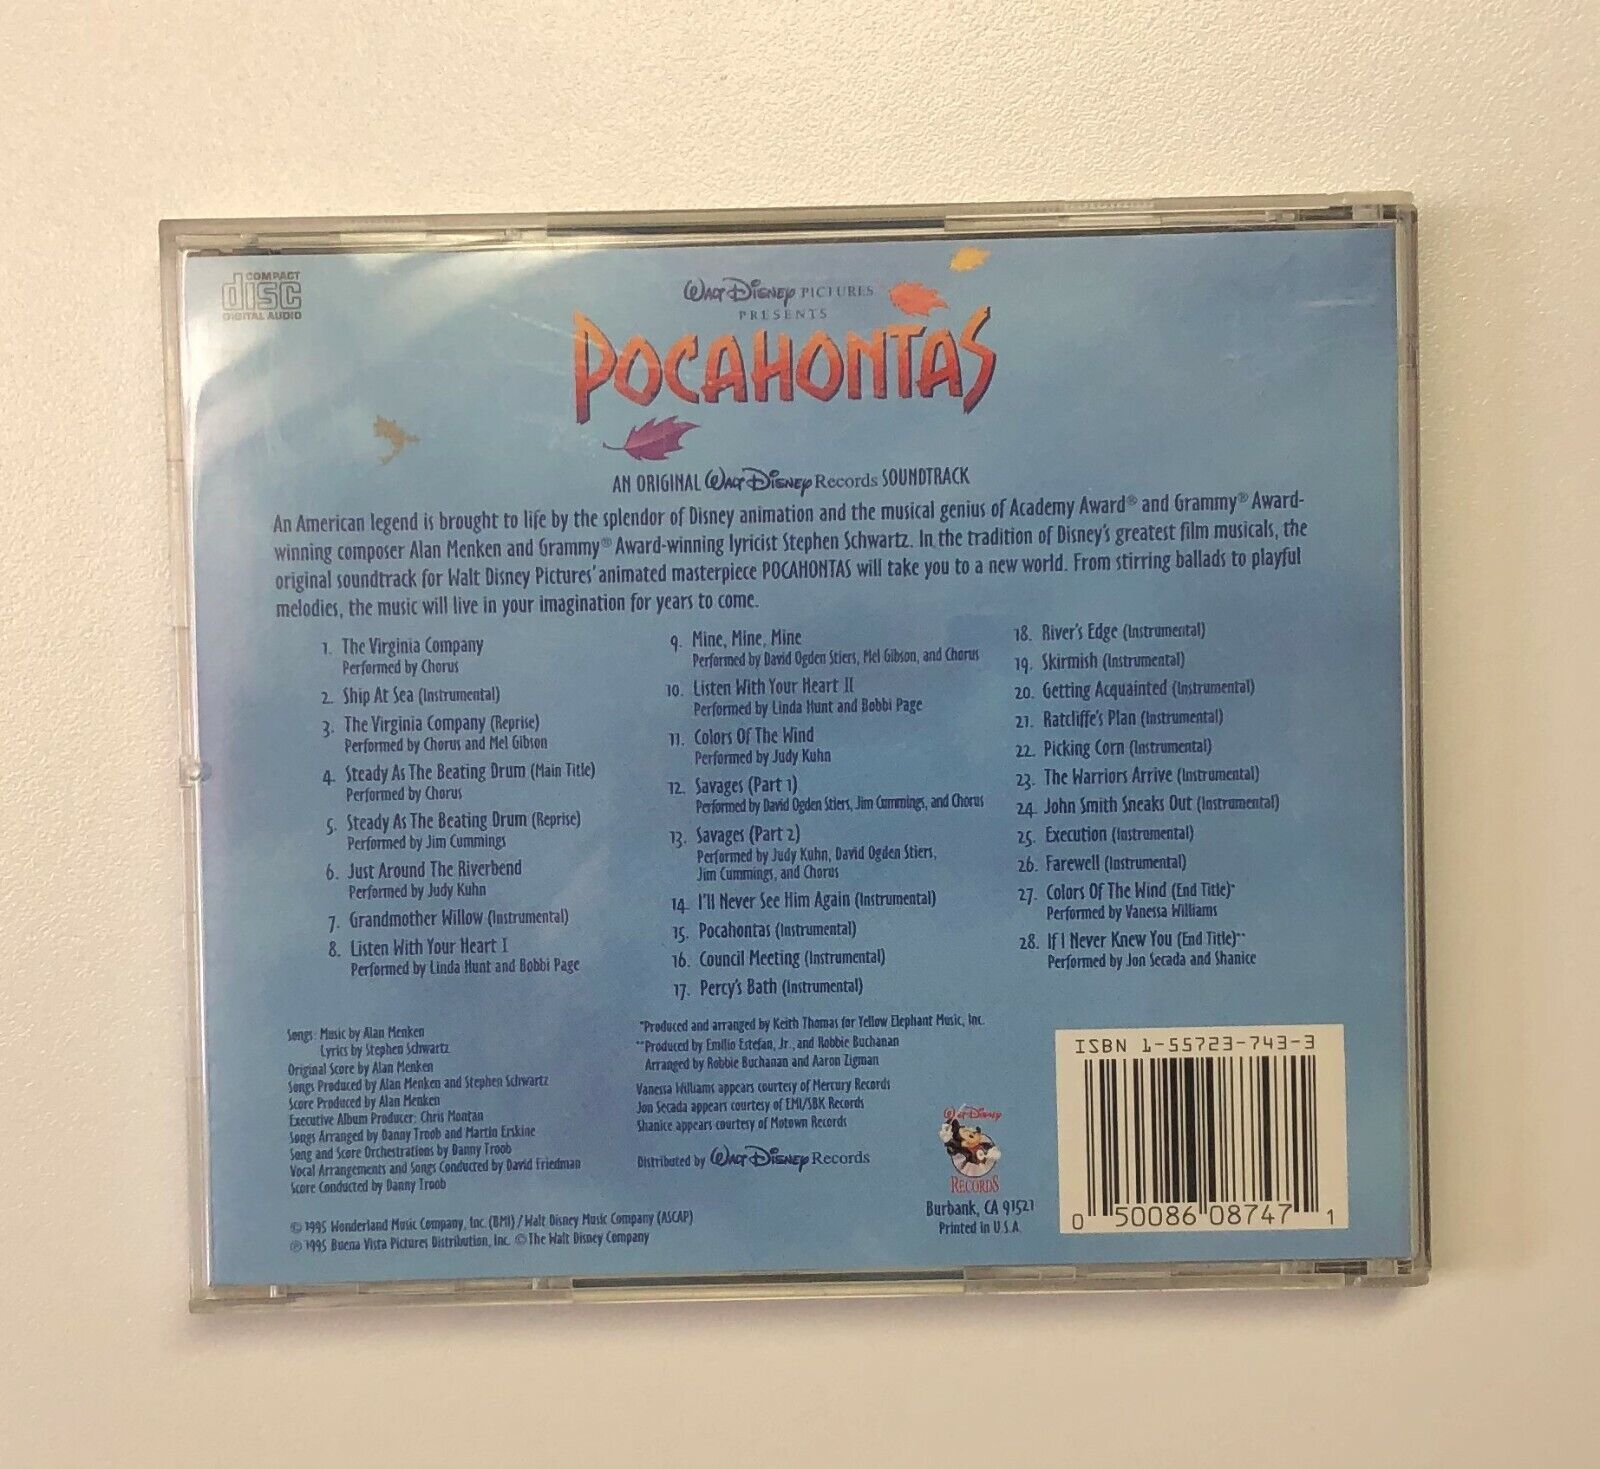 Pocahontas: An Original Walt Disney Records Soundtrack, Various Artists CD  50086087471 | eBay